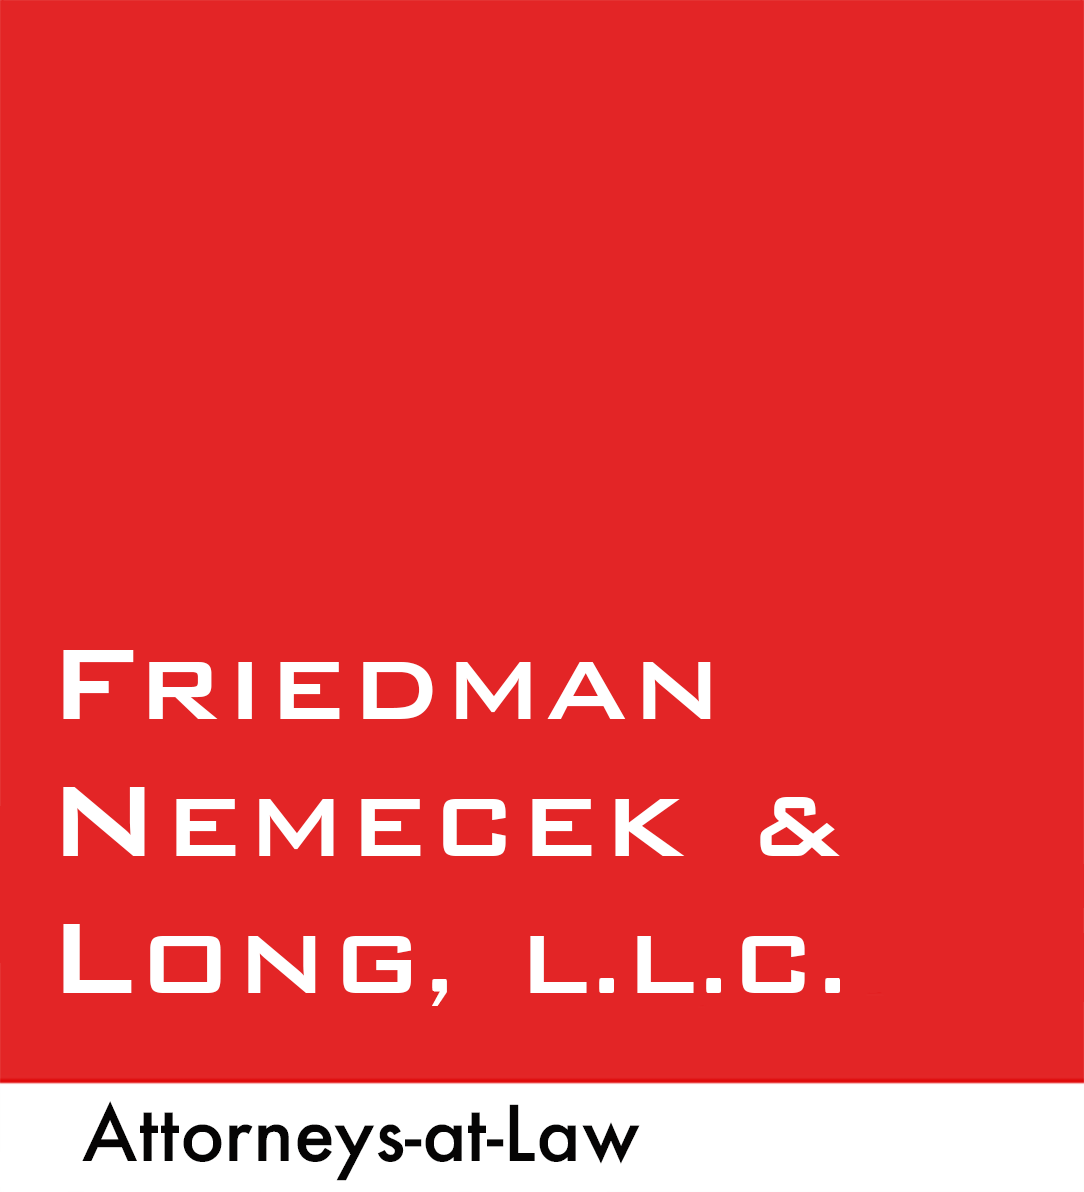 Friedman Nemecek & Long, L.L.C